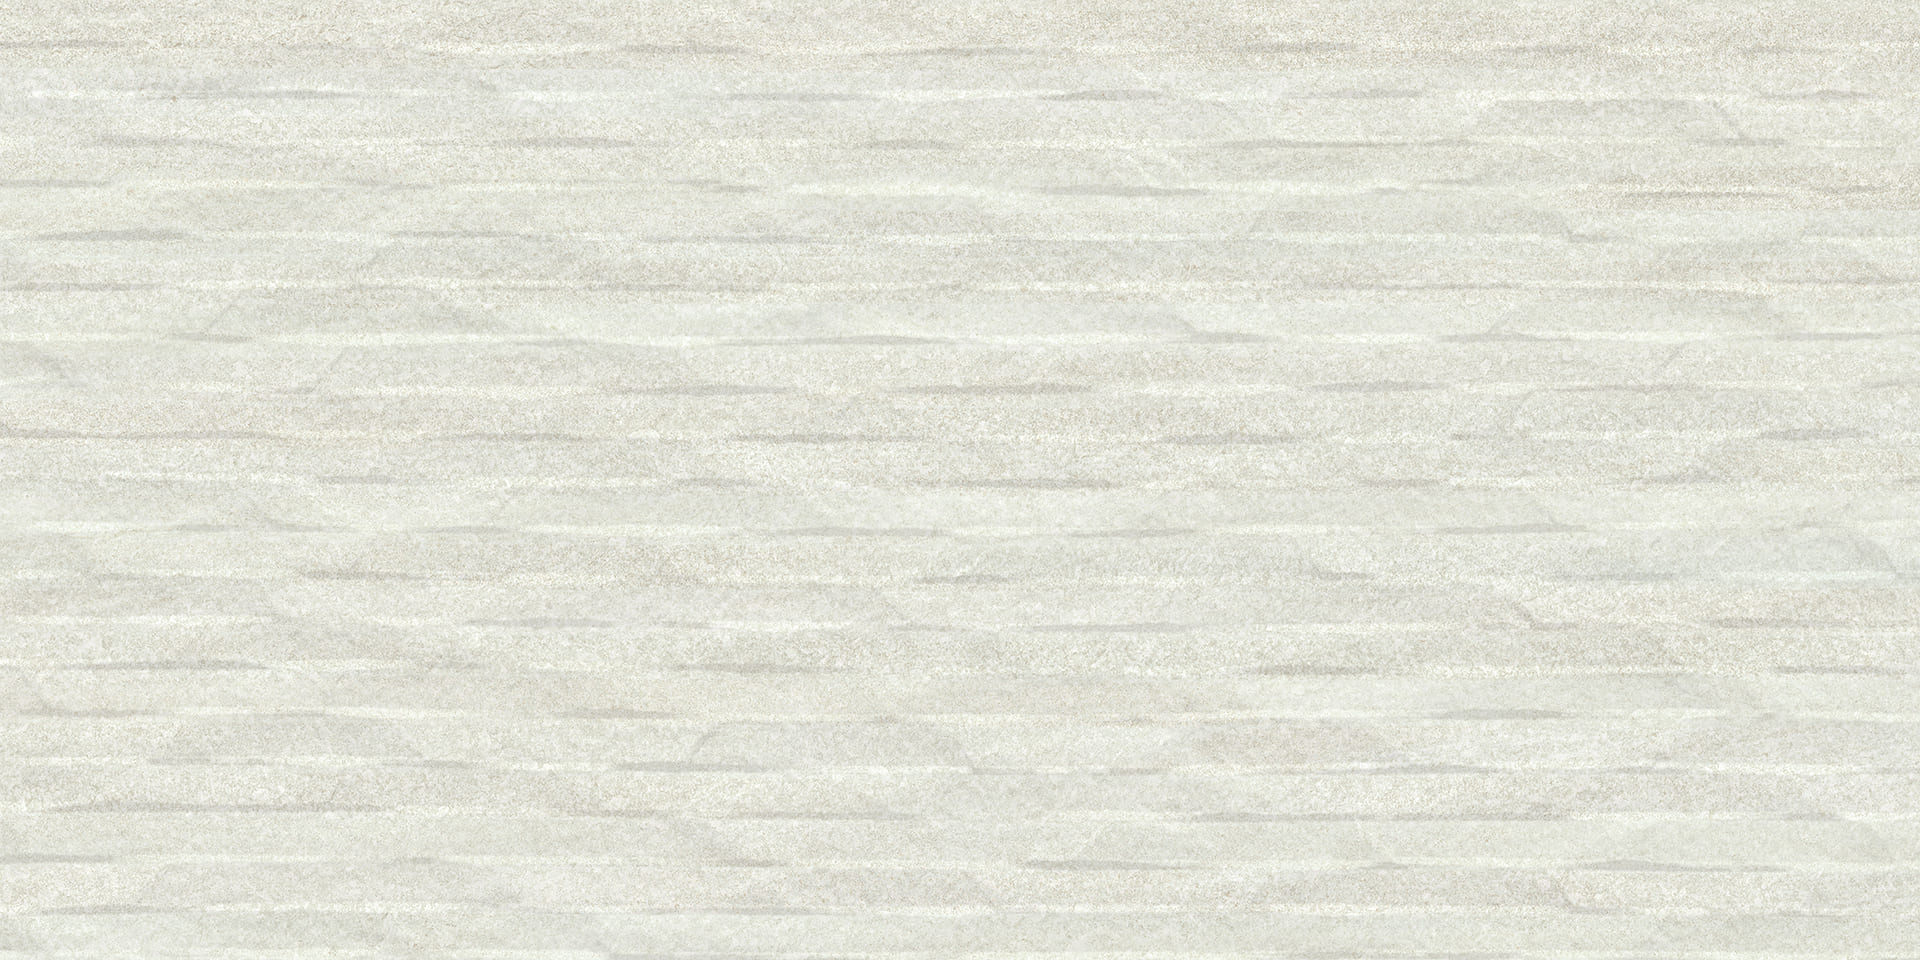 Elegance Pro: Mural White Wall Tile (12"x24"x9.5-mm | matte)